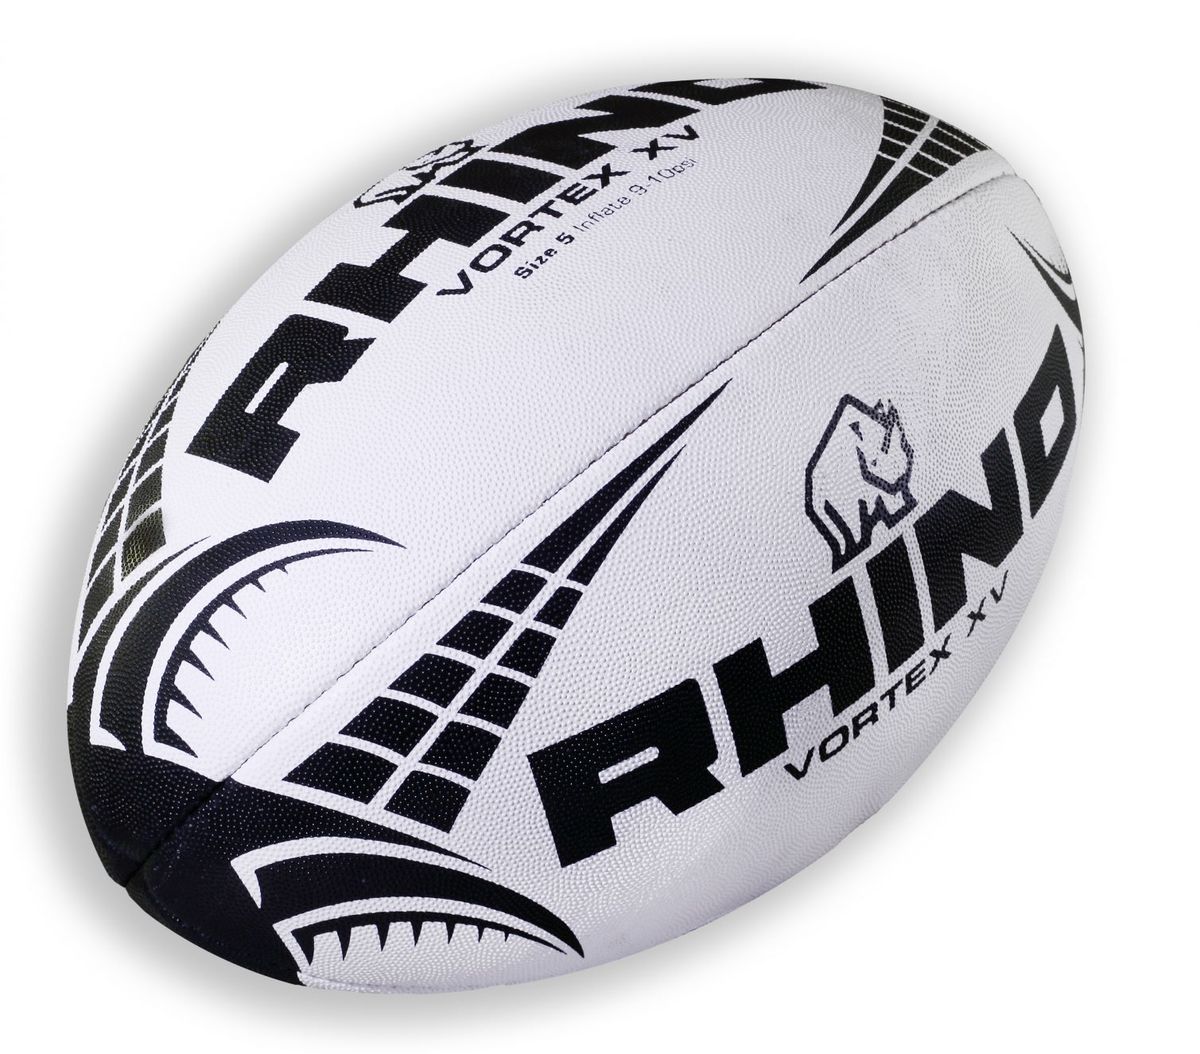 Rhino Vortex XV Match Ball - Size 5